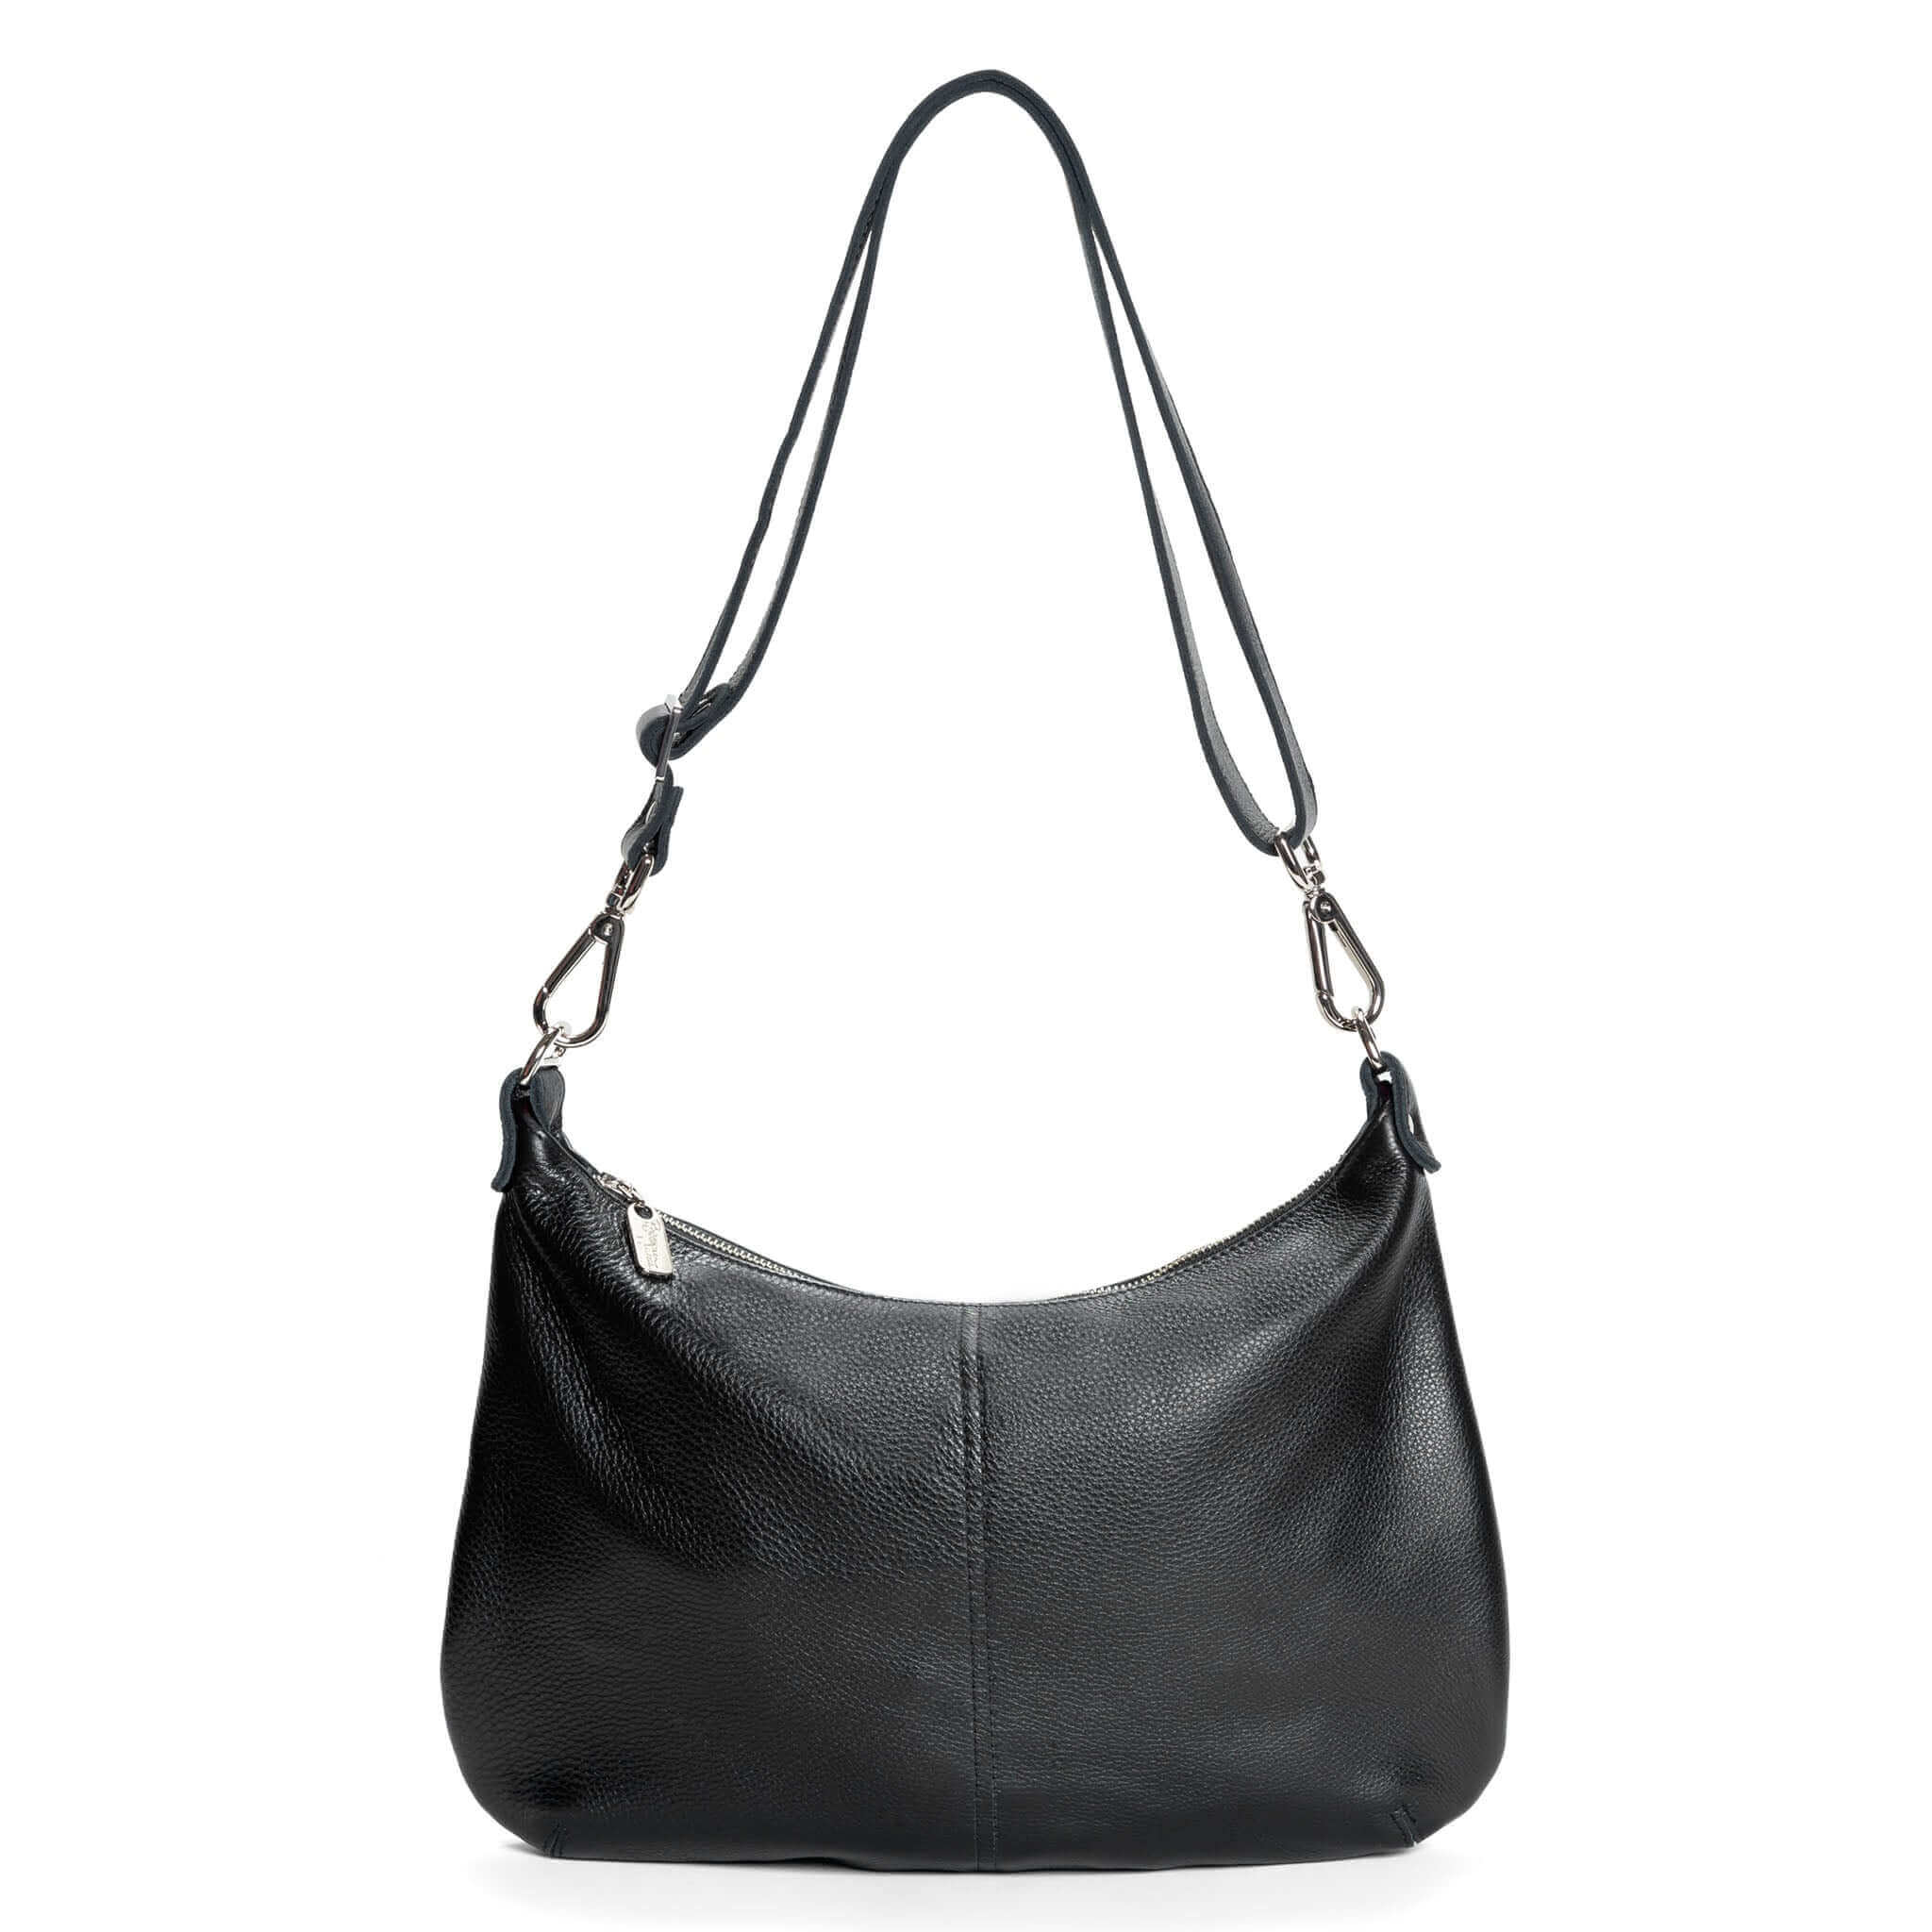 Nylon Black Handbag Essential Portable Everyday Crossbody Purse  24.5*19*12.5 CM | eBay